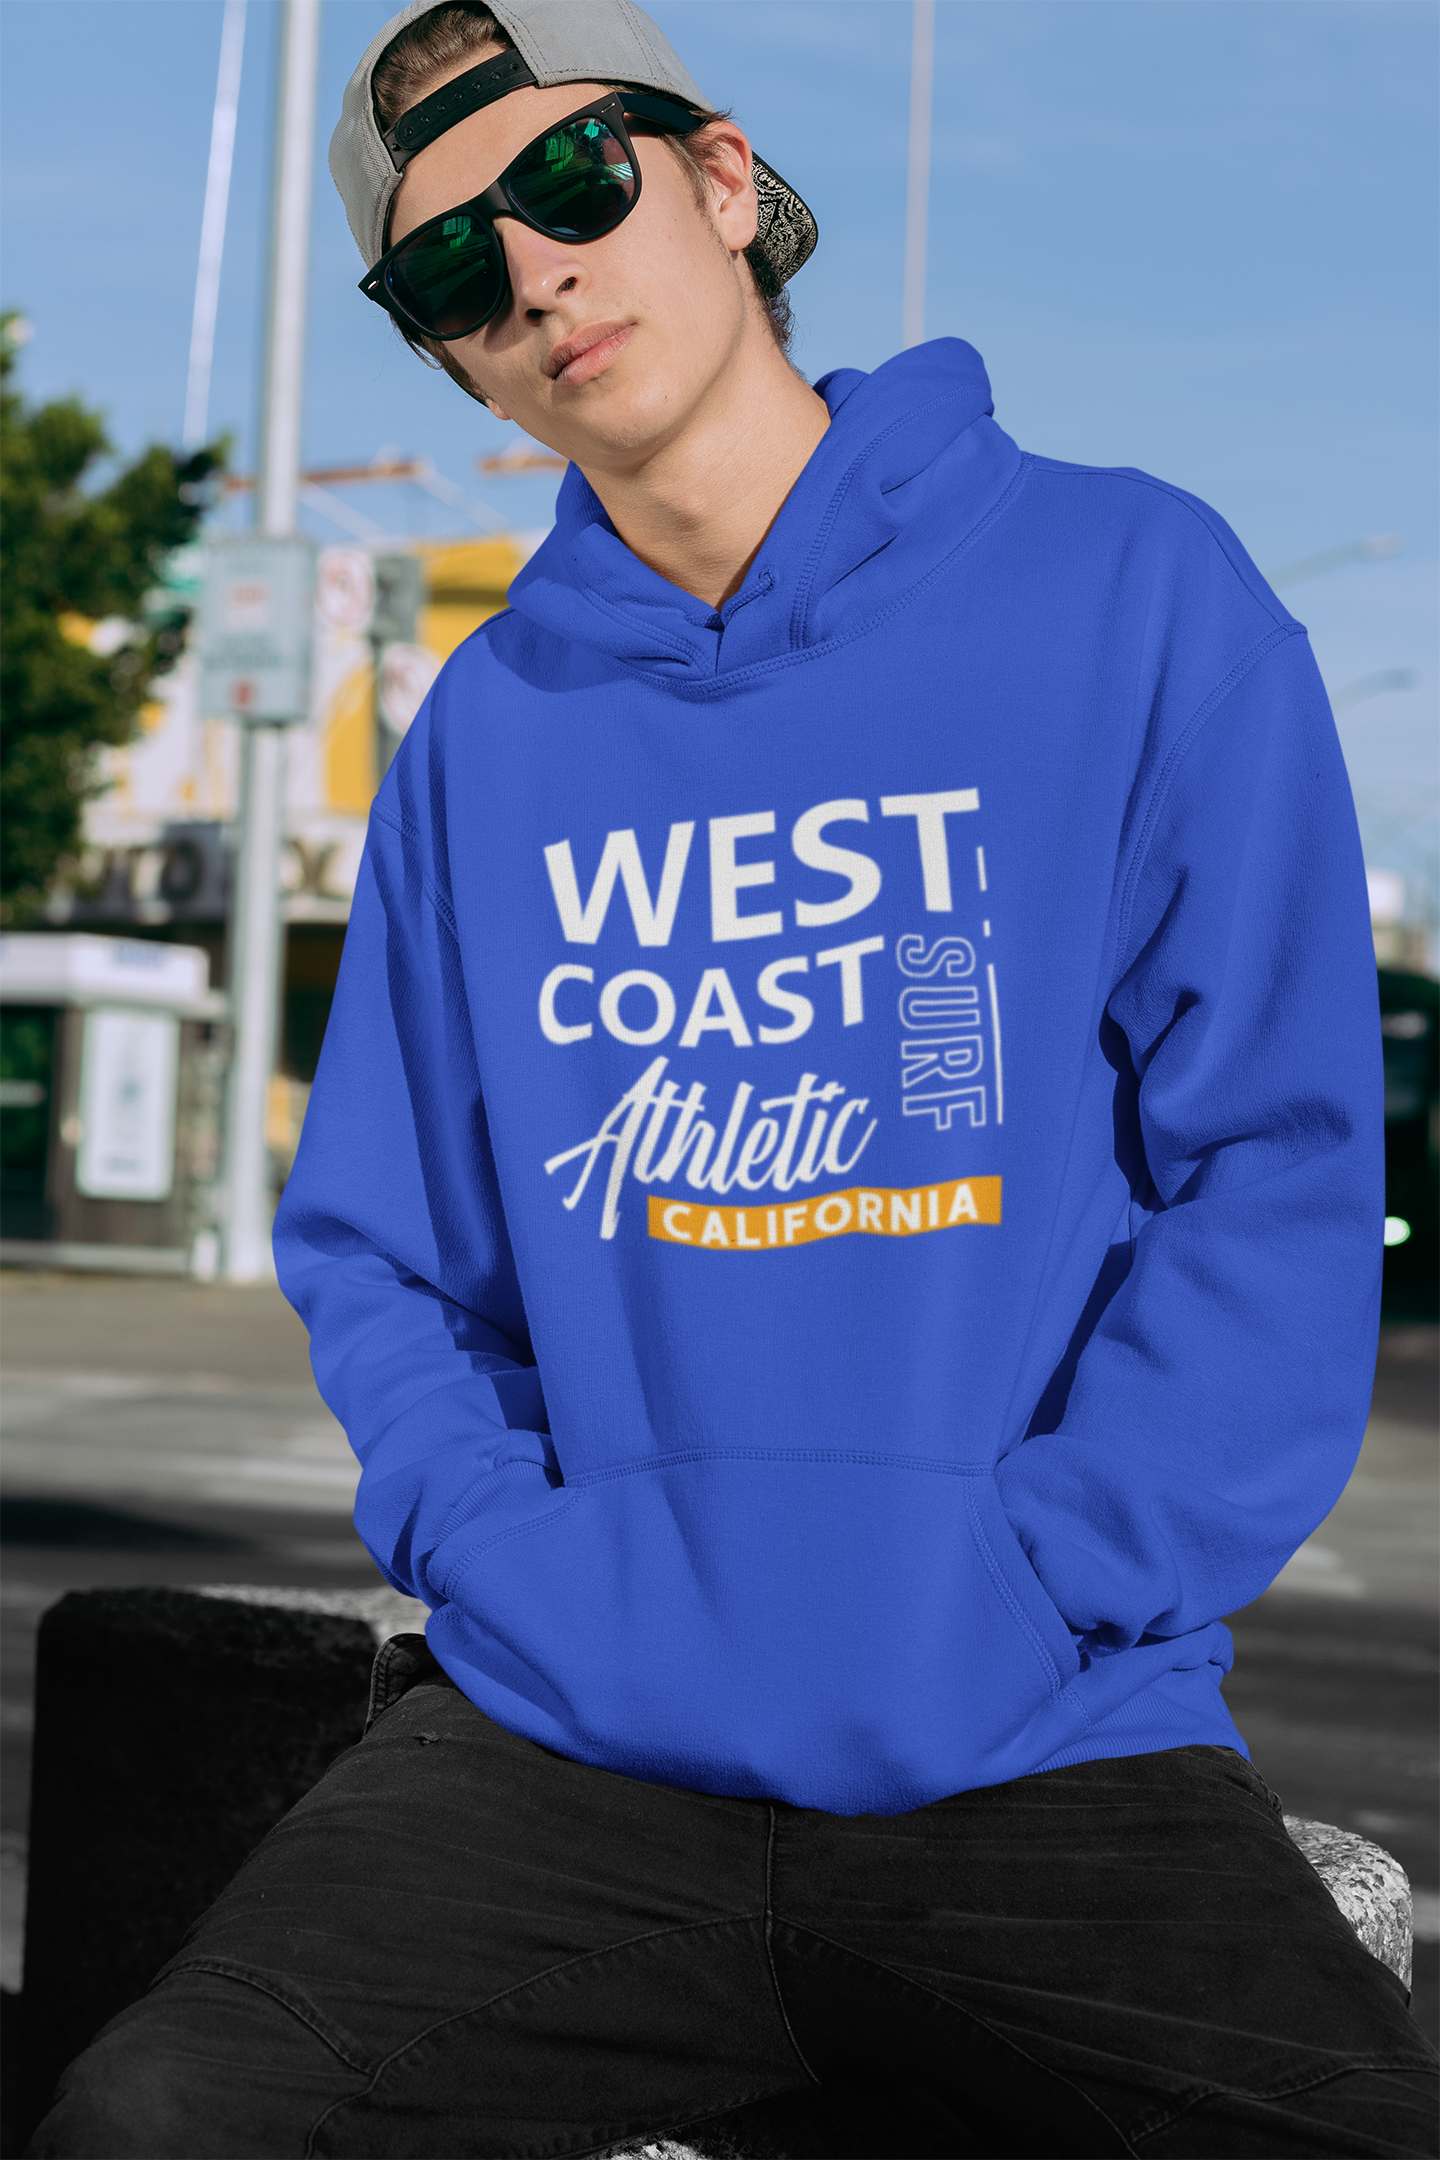 Stylish Hoodies for Men | West Coast Athletic Activewear / Athleisure blue